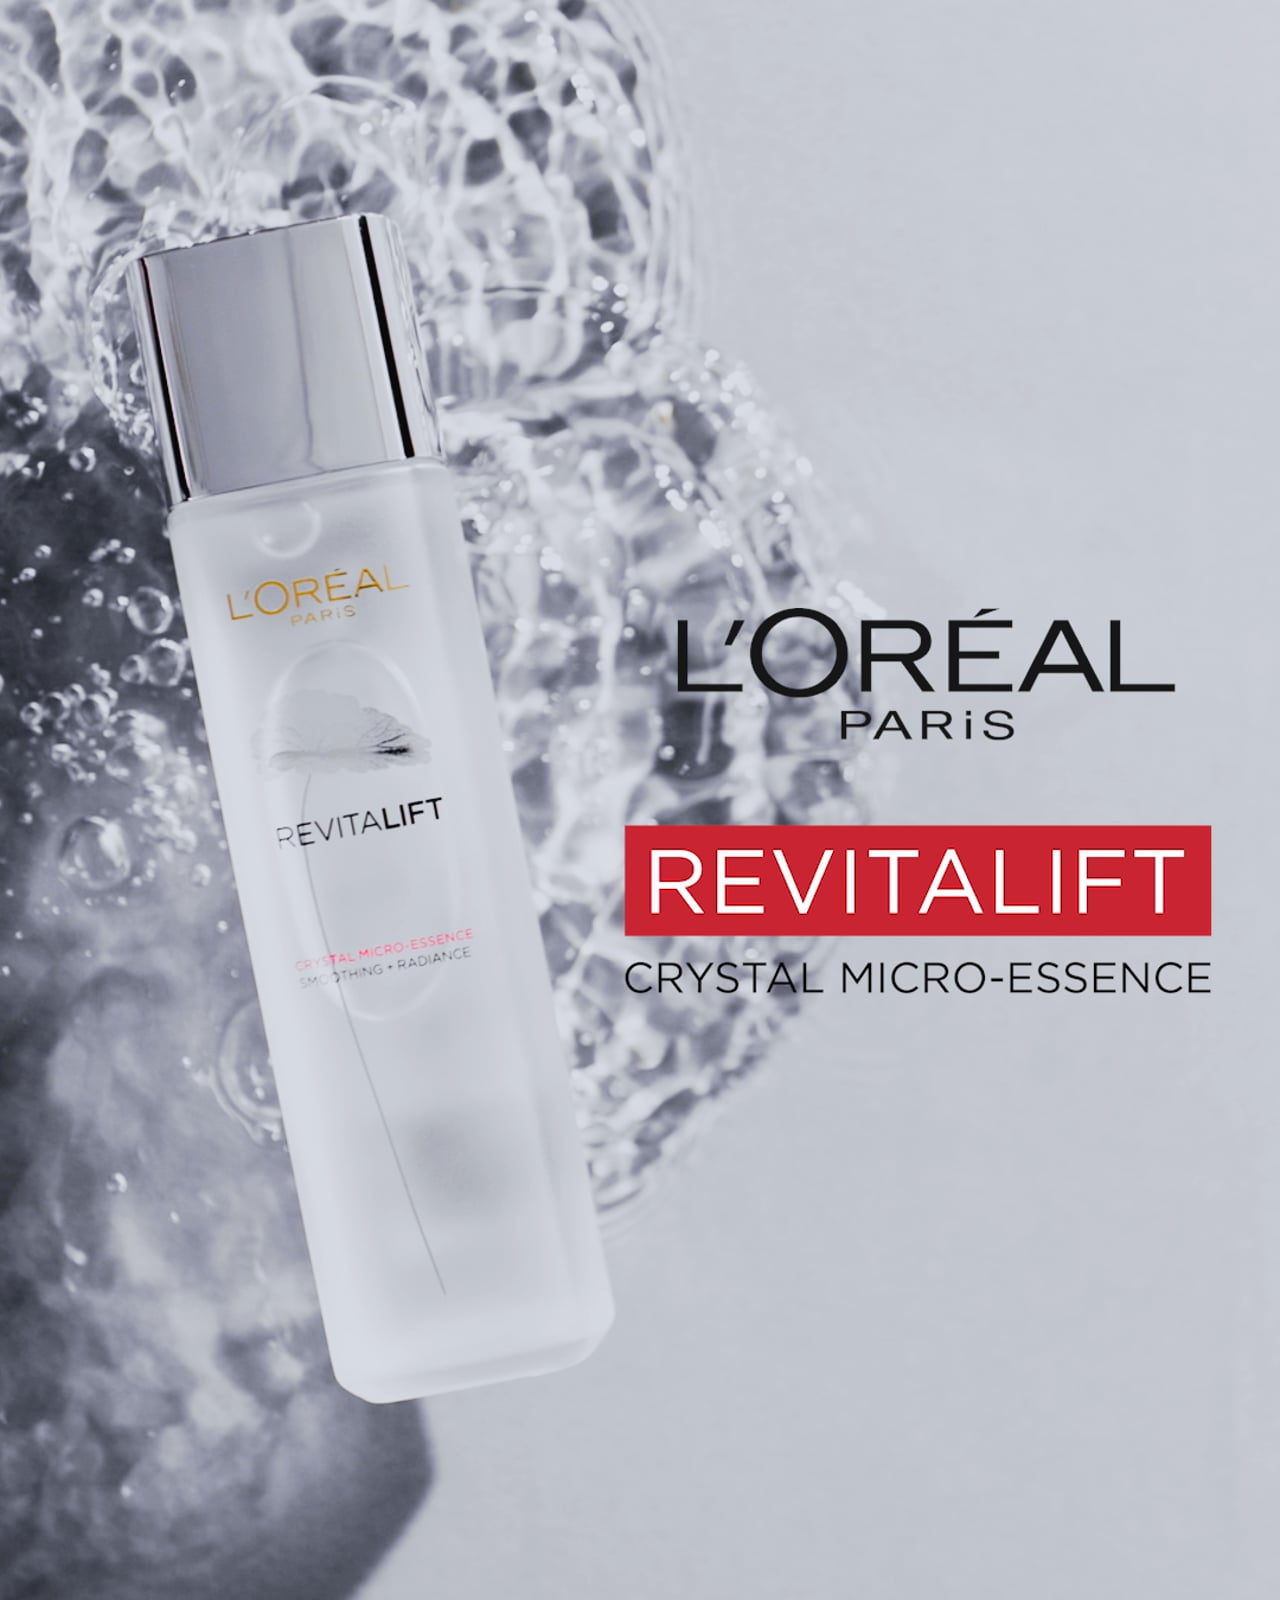 LOreal Revitalift Crystal Micro-Essence